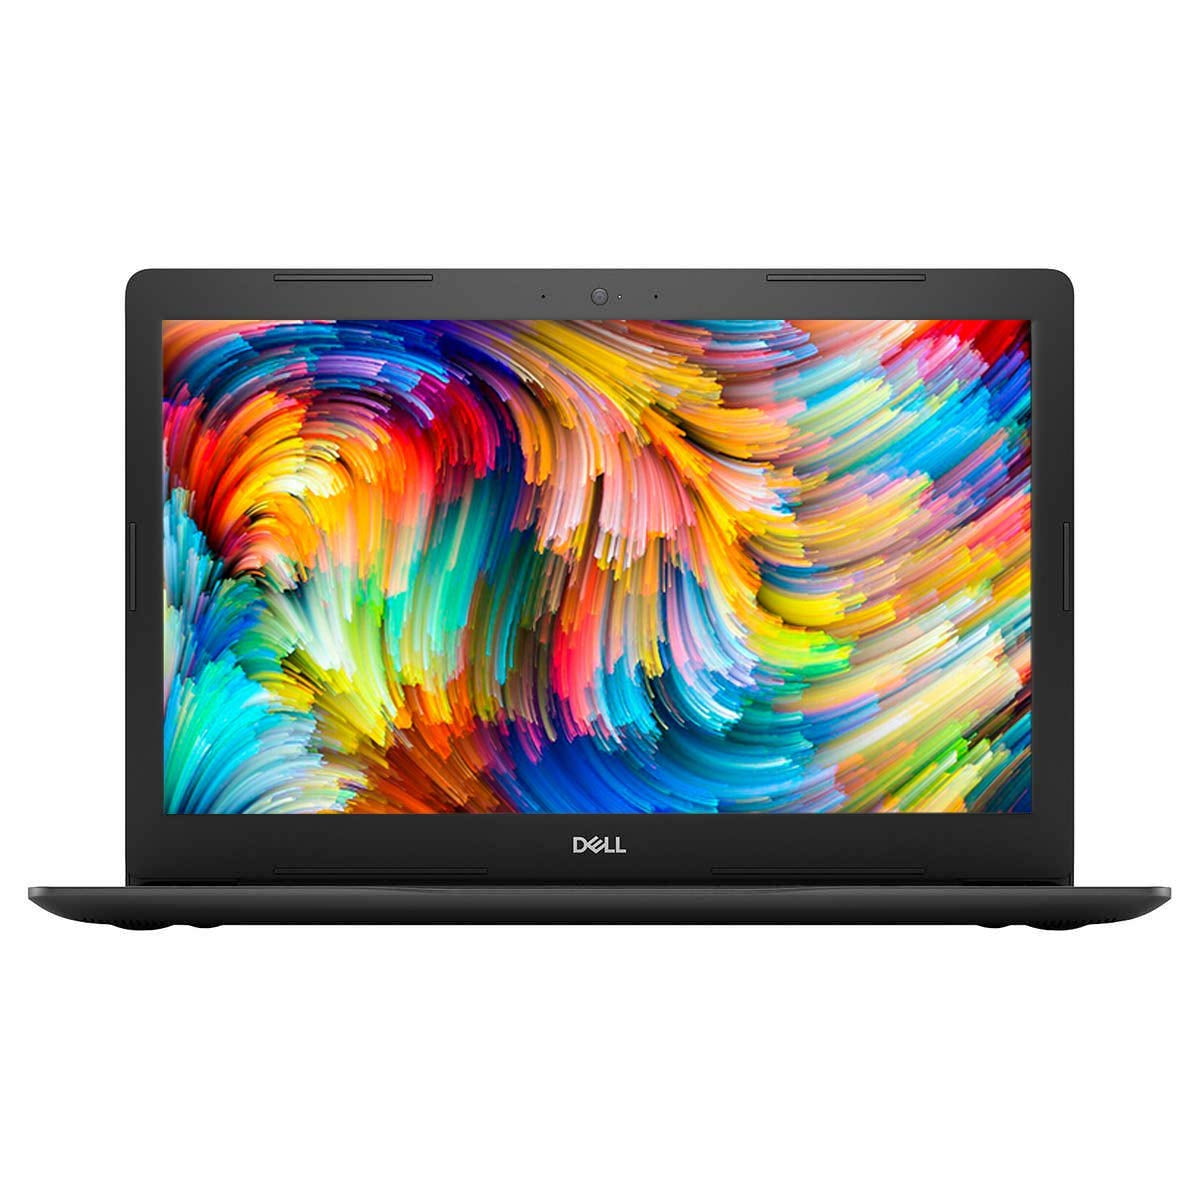 Dell Inspiron 15 3000, 2019 Flagship 15.6" HD AntiGlare Laptop, 8th Gen Intel QuadCore i7